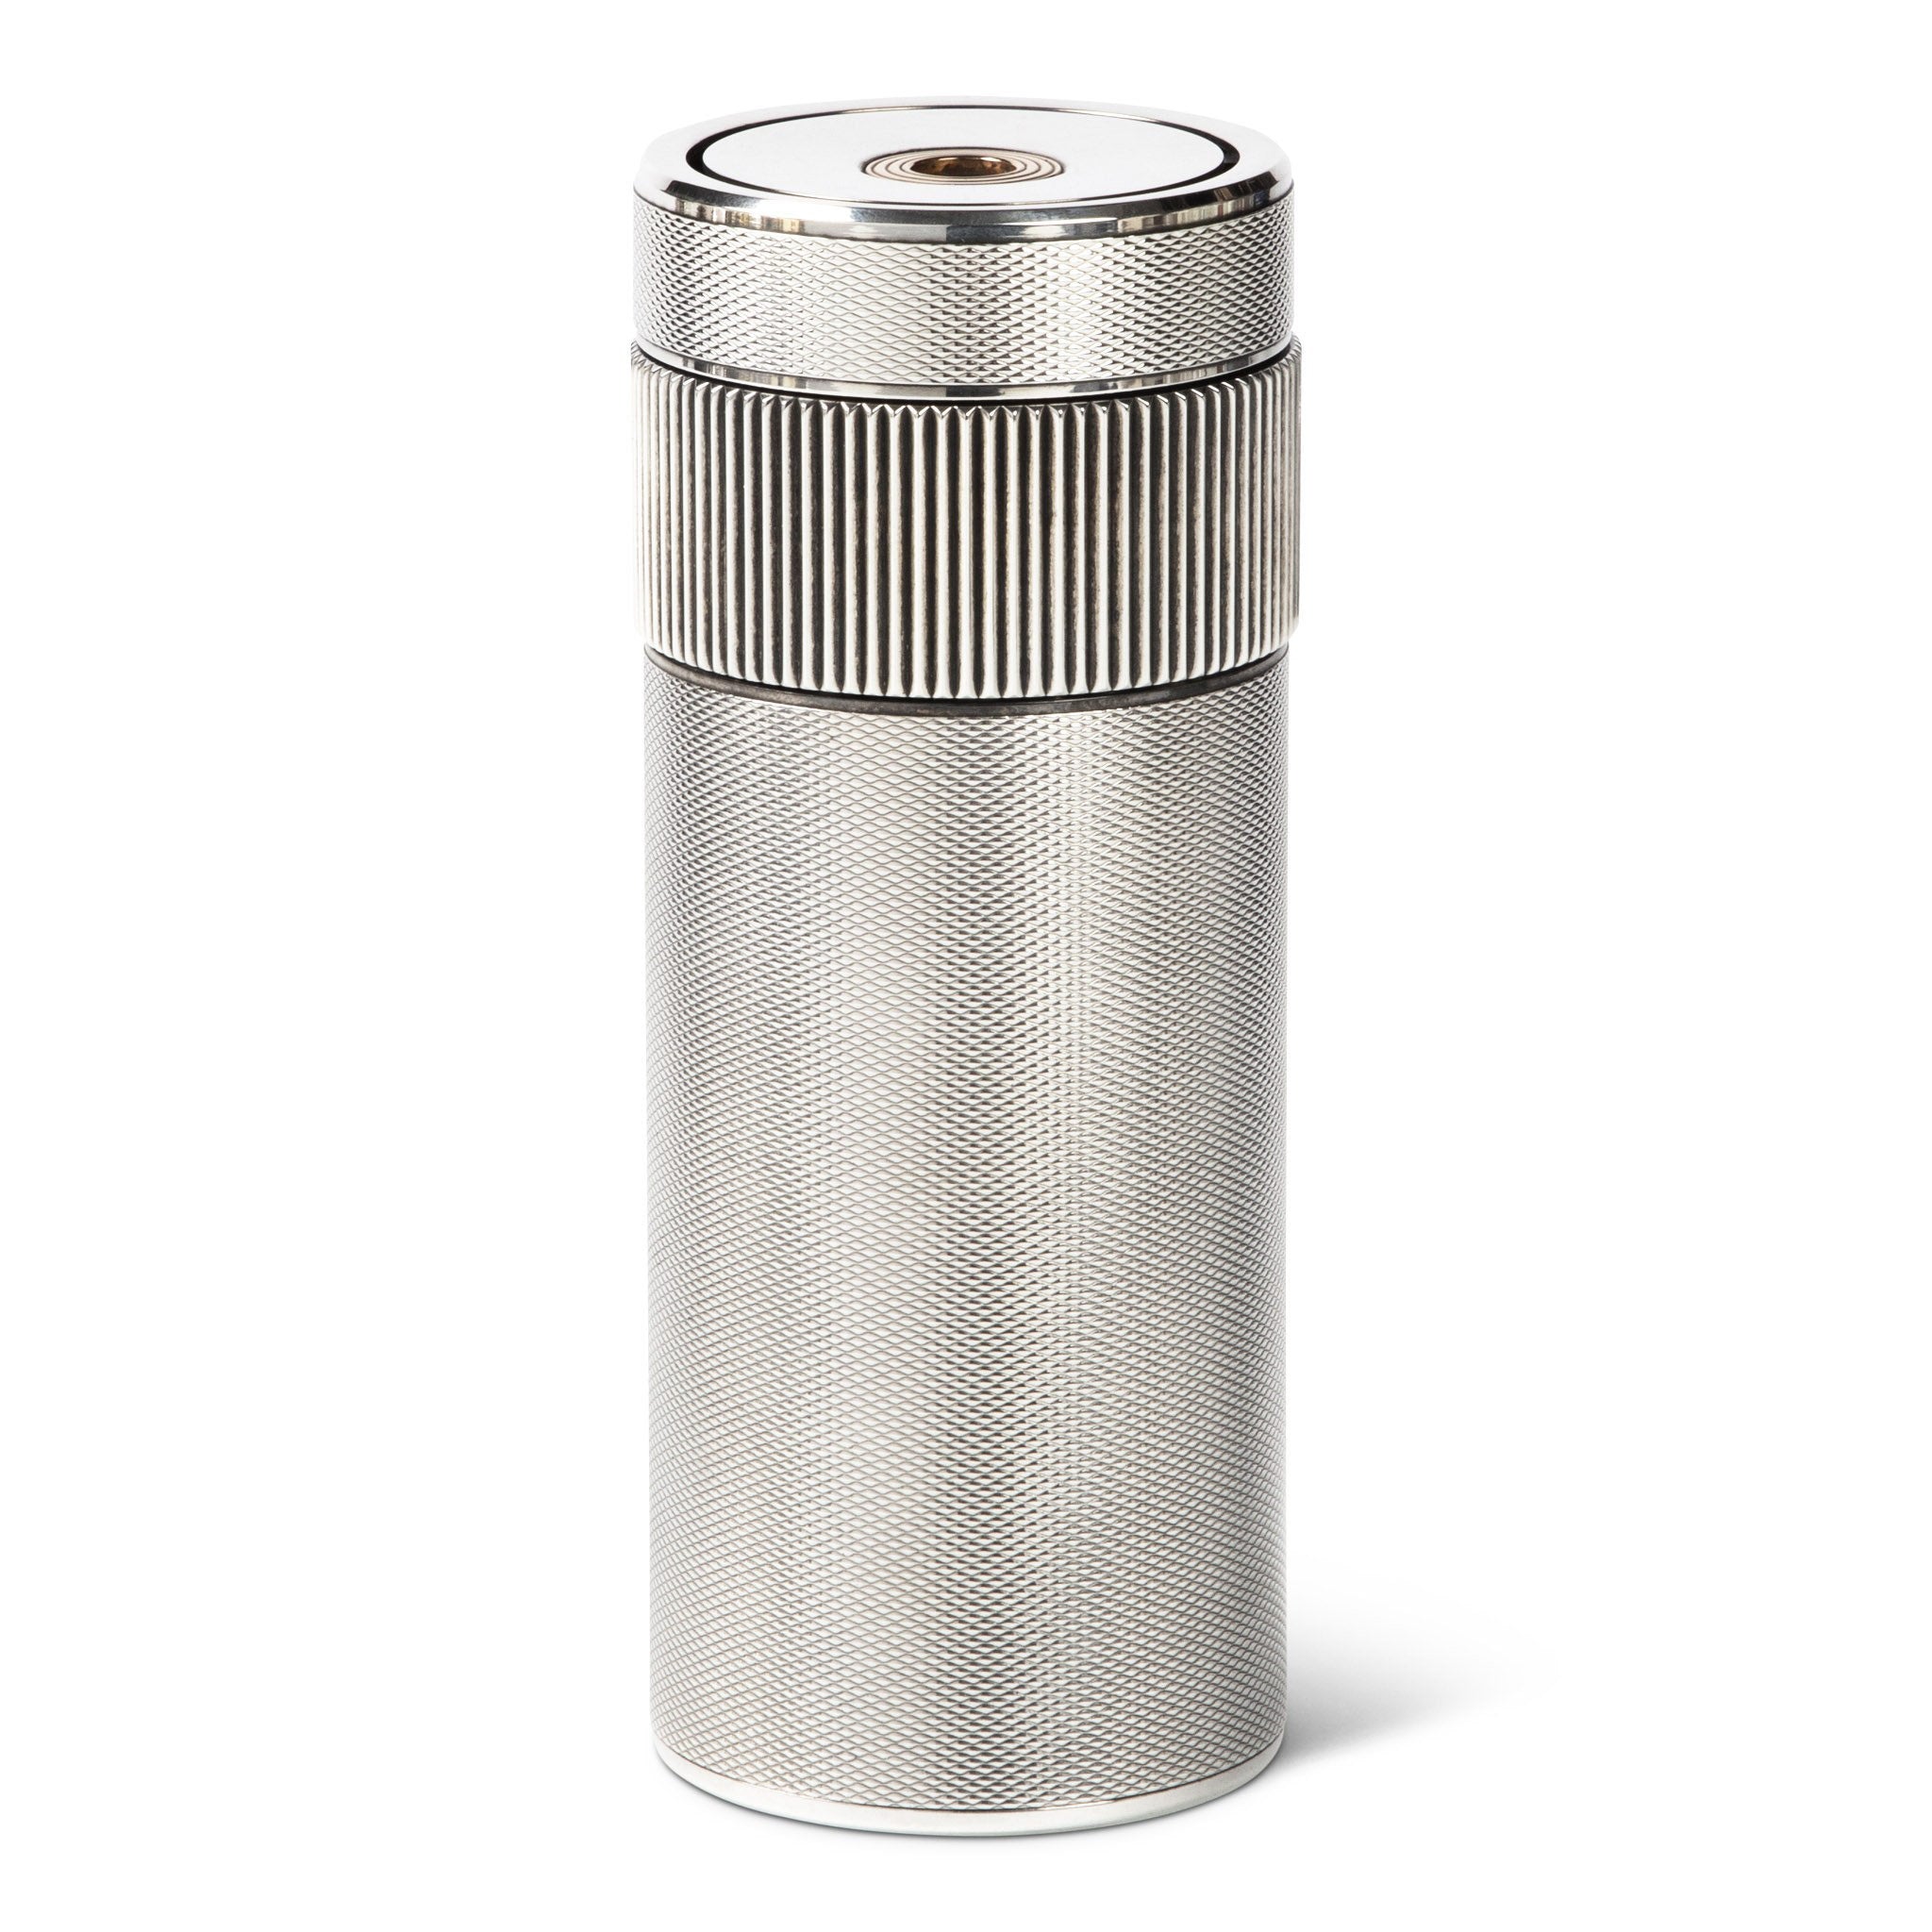 S.T. Dupont Silver Grain D'Orge Cylinder Table Lighter